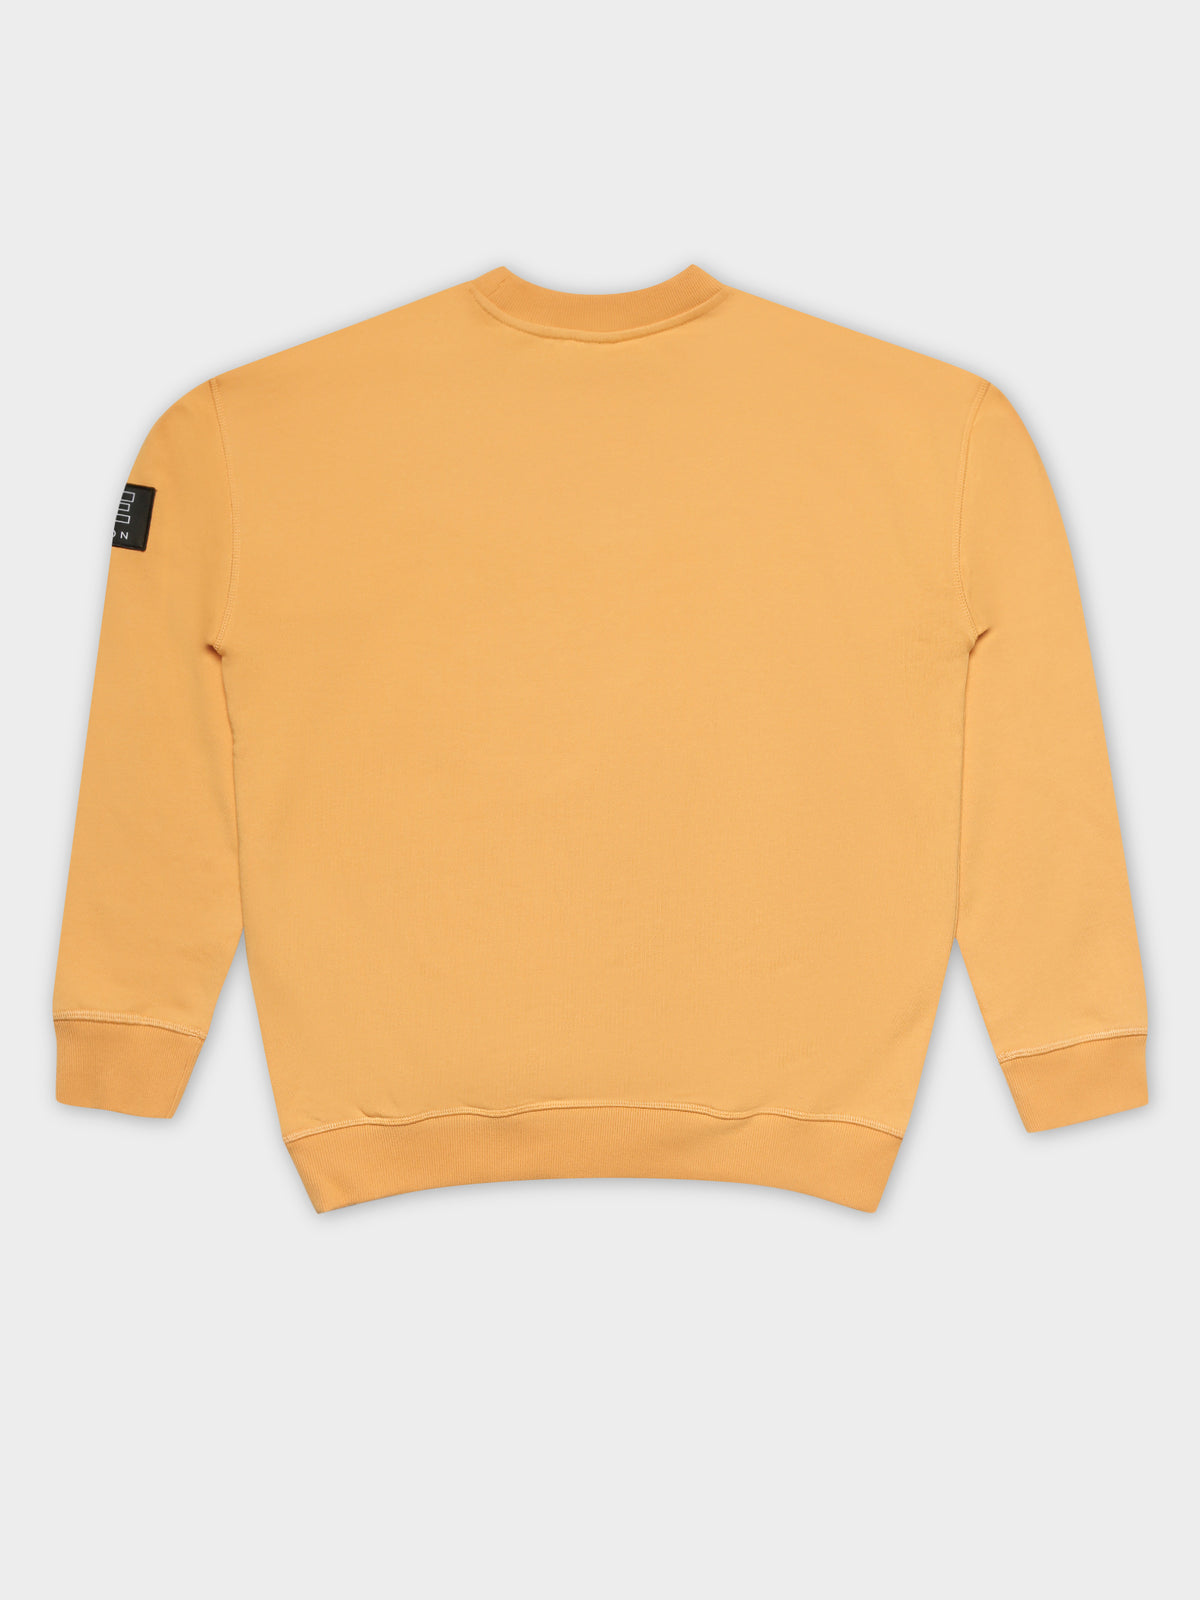 Heads Up Sweatshirt in Orange Light